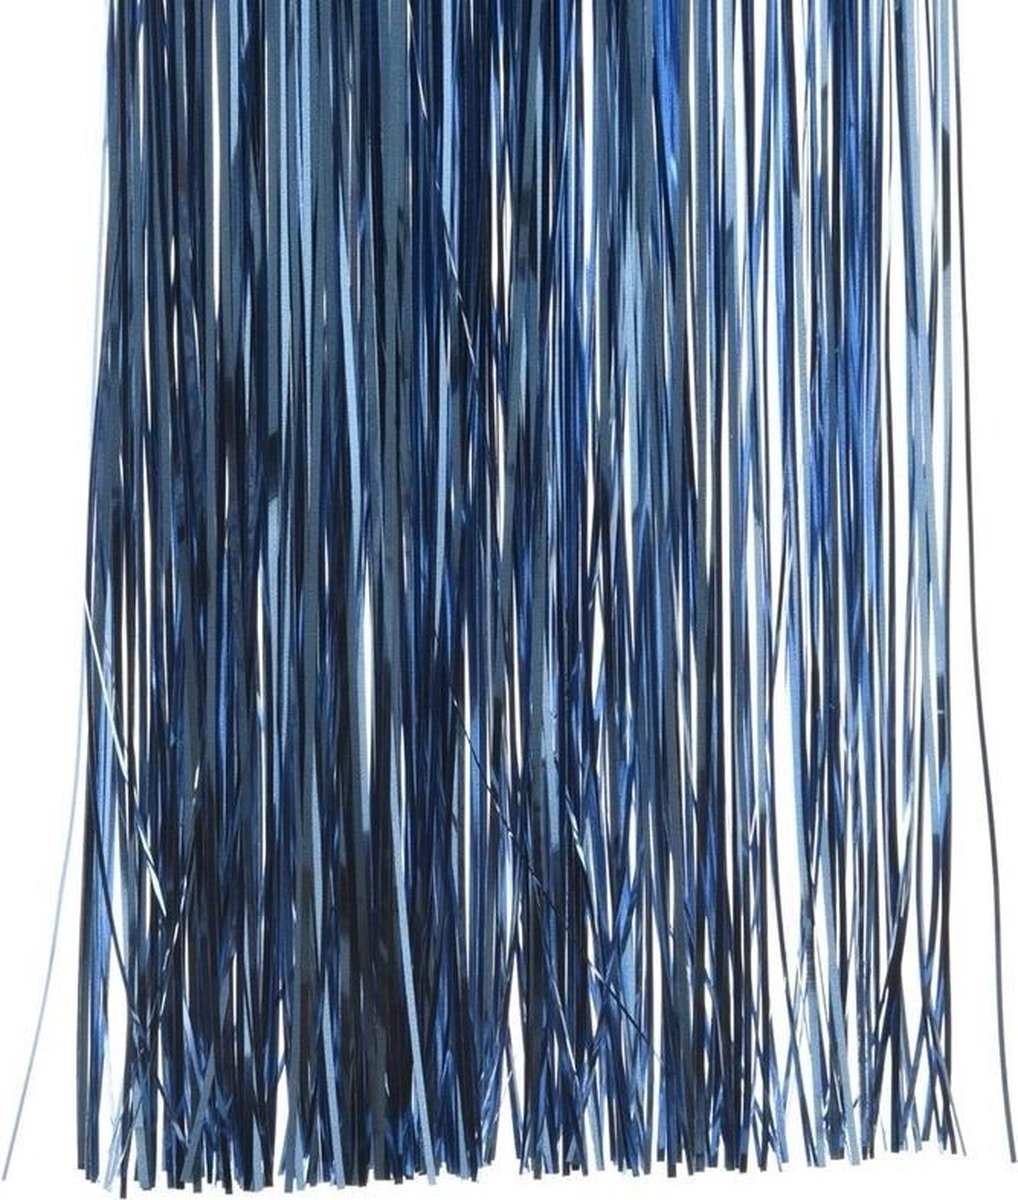 5x Blauwe kerstversiering folie slierten 50 cm - Tinsel kerstboom slinger 50 x 40 cm 5 stuks